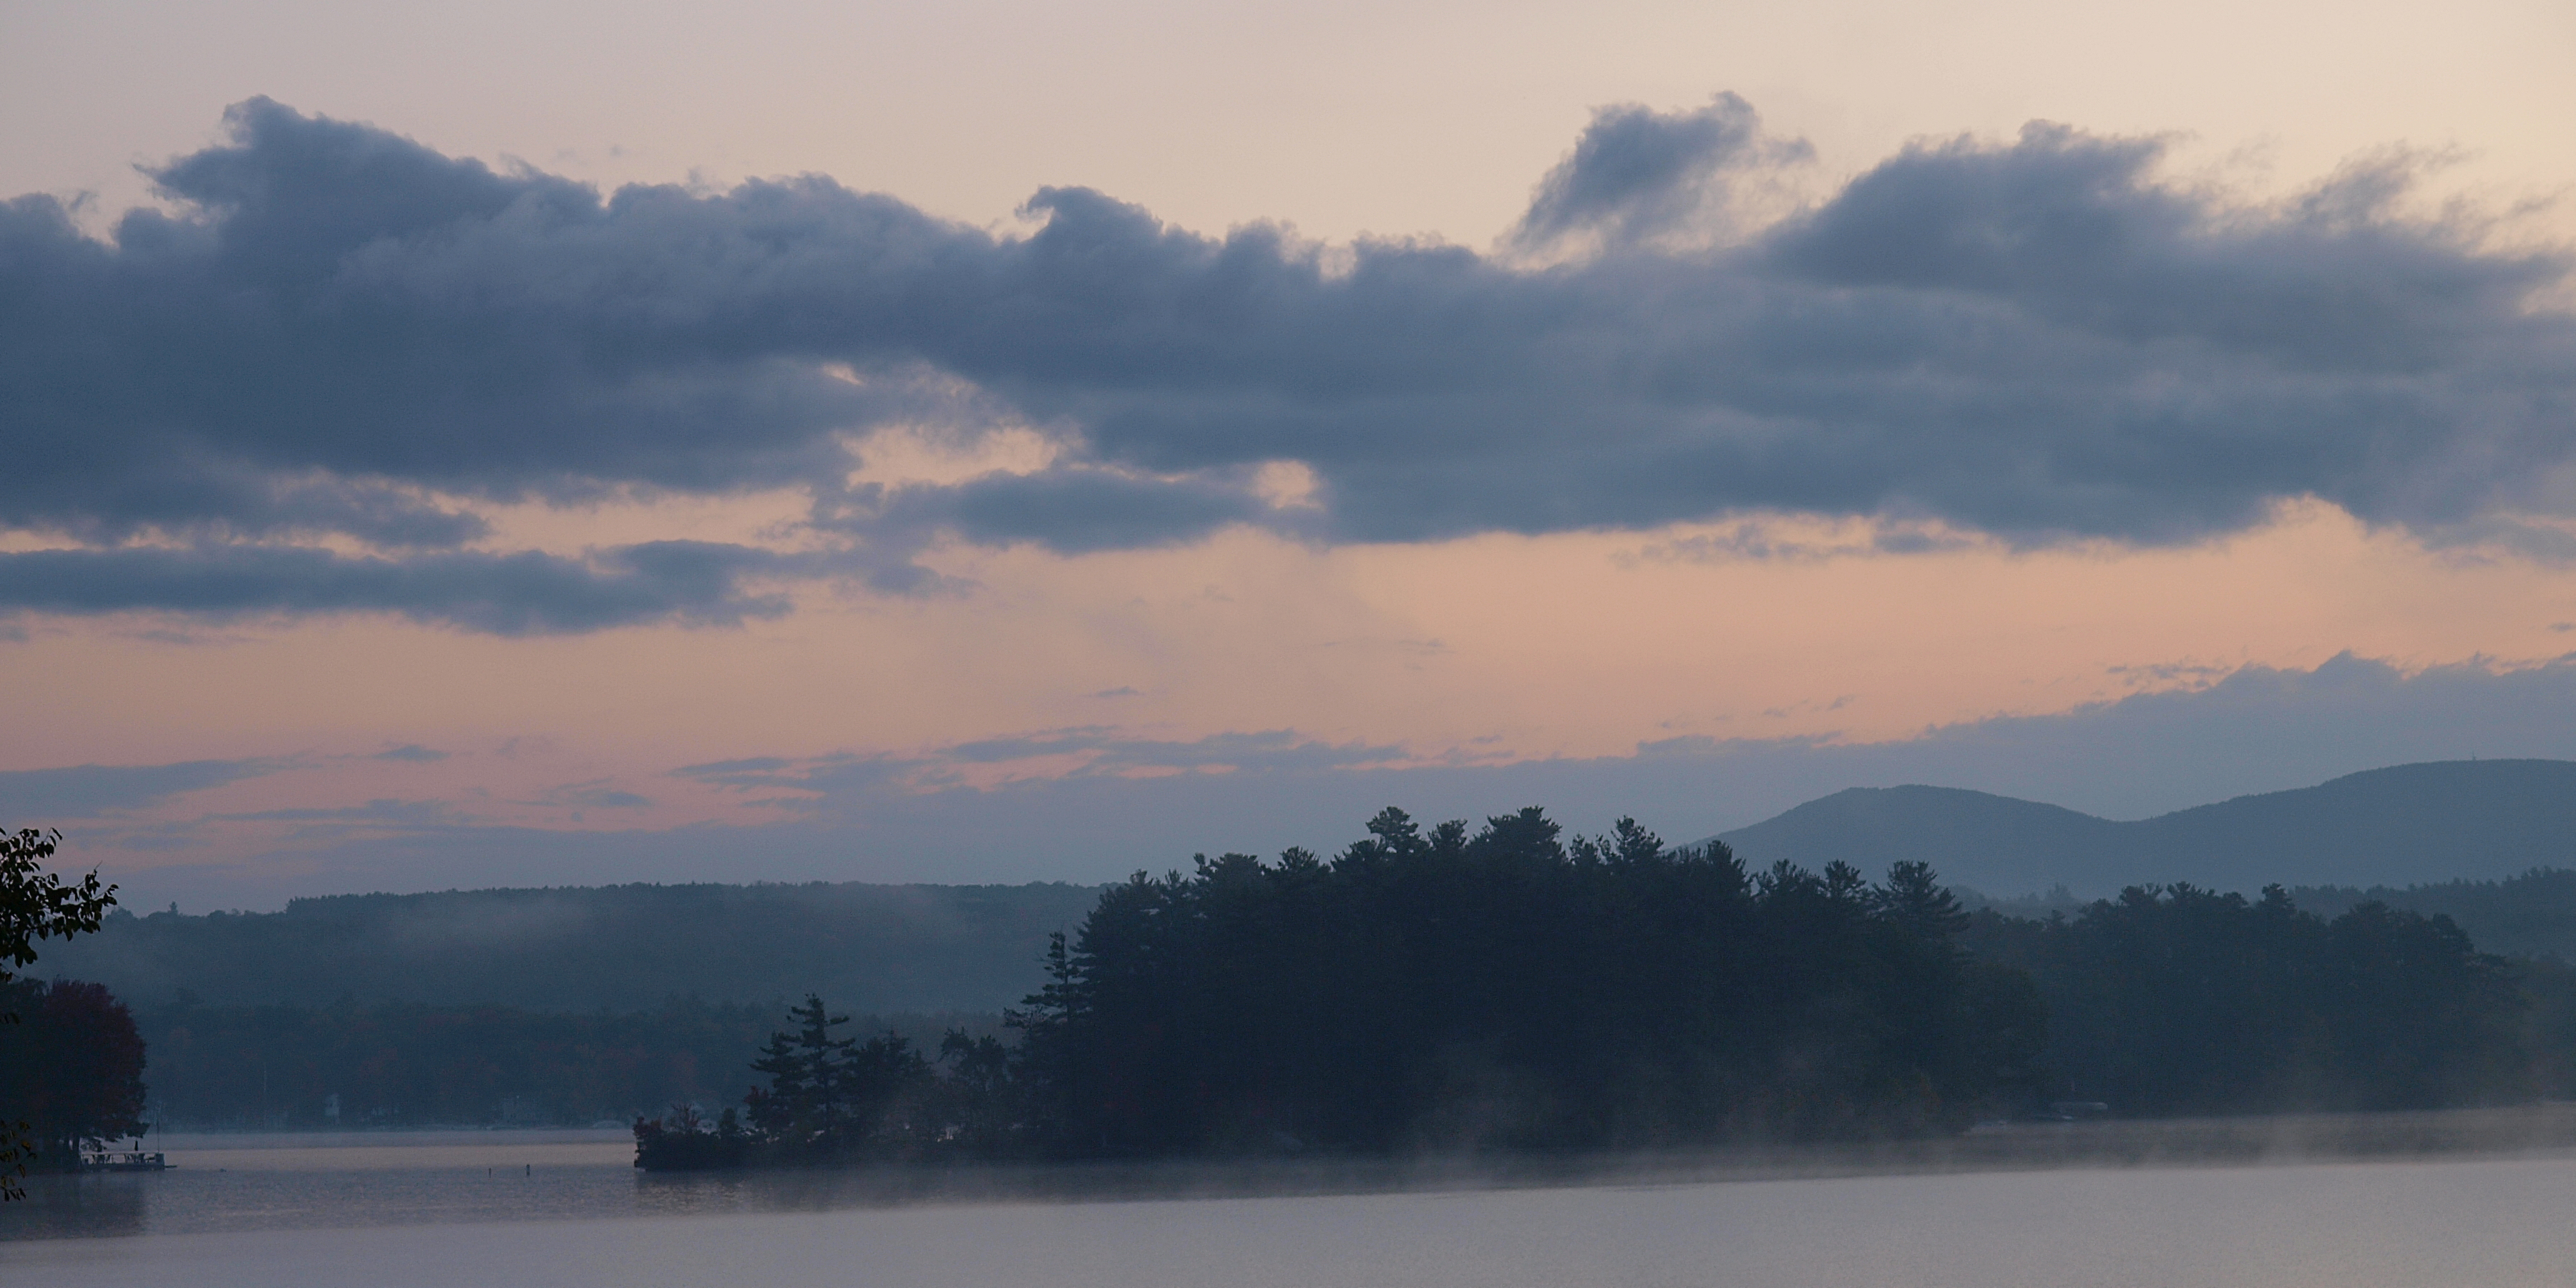 Sunrise at Lake Webster, New Hampshire #3